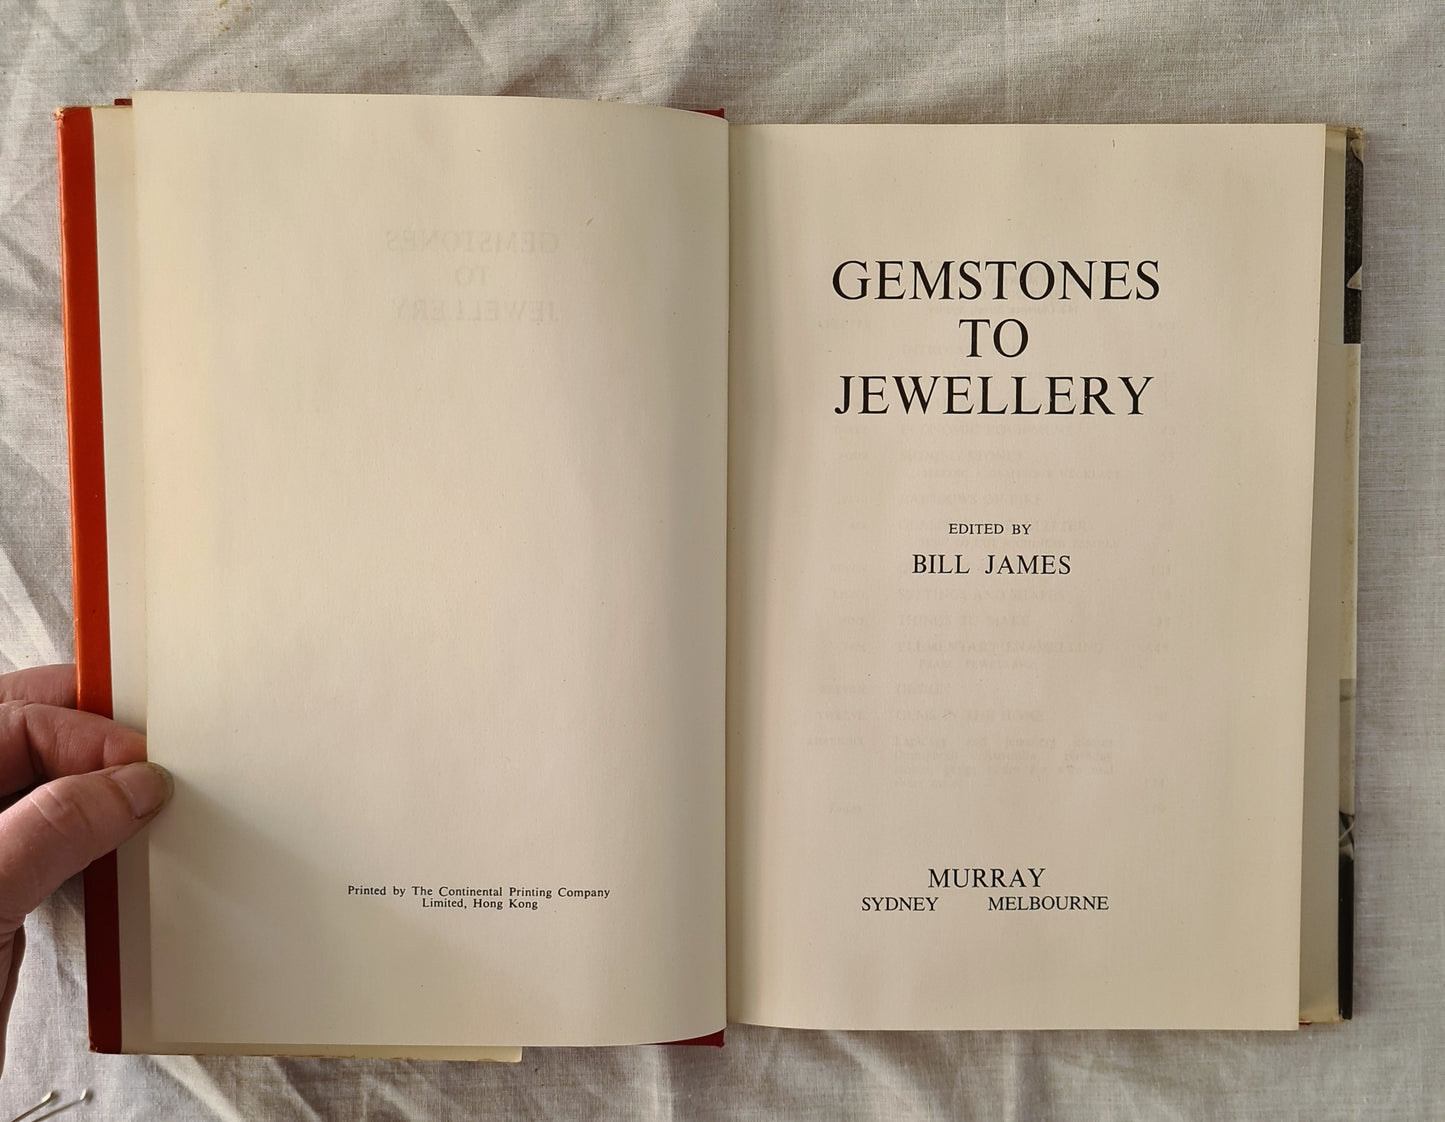 Gemstones to Jewellery by Bill James